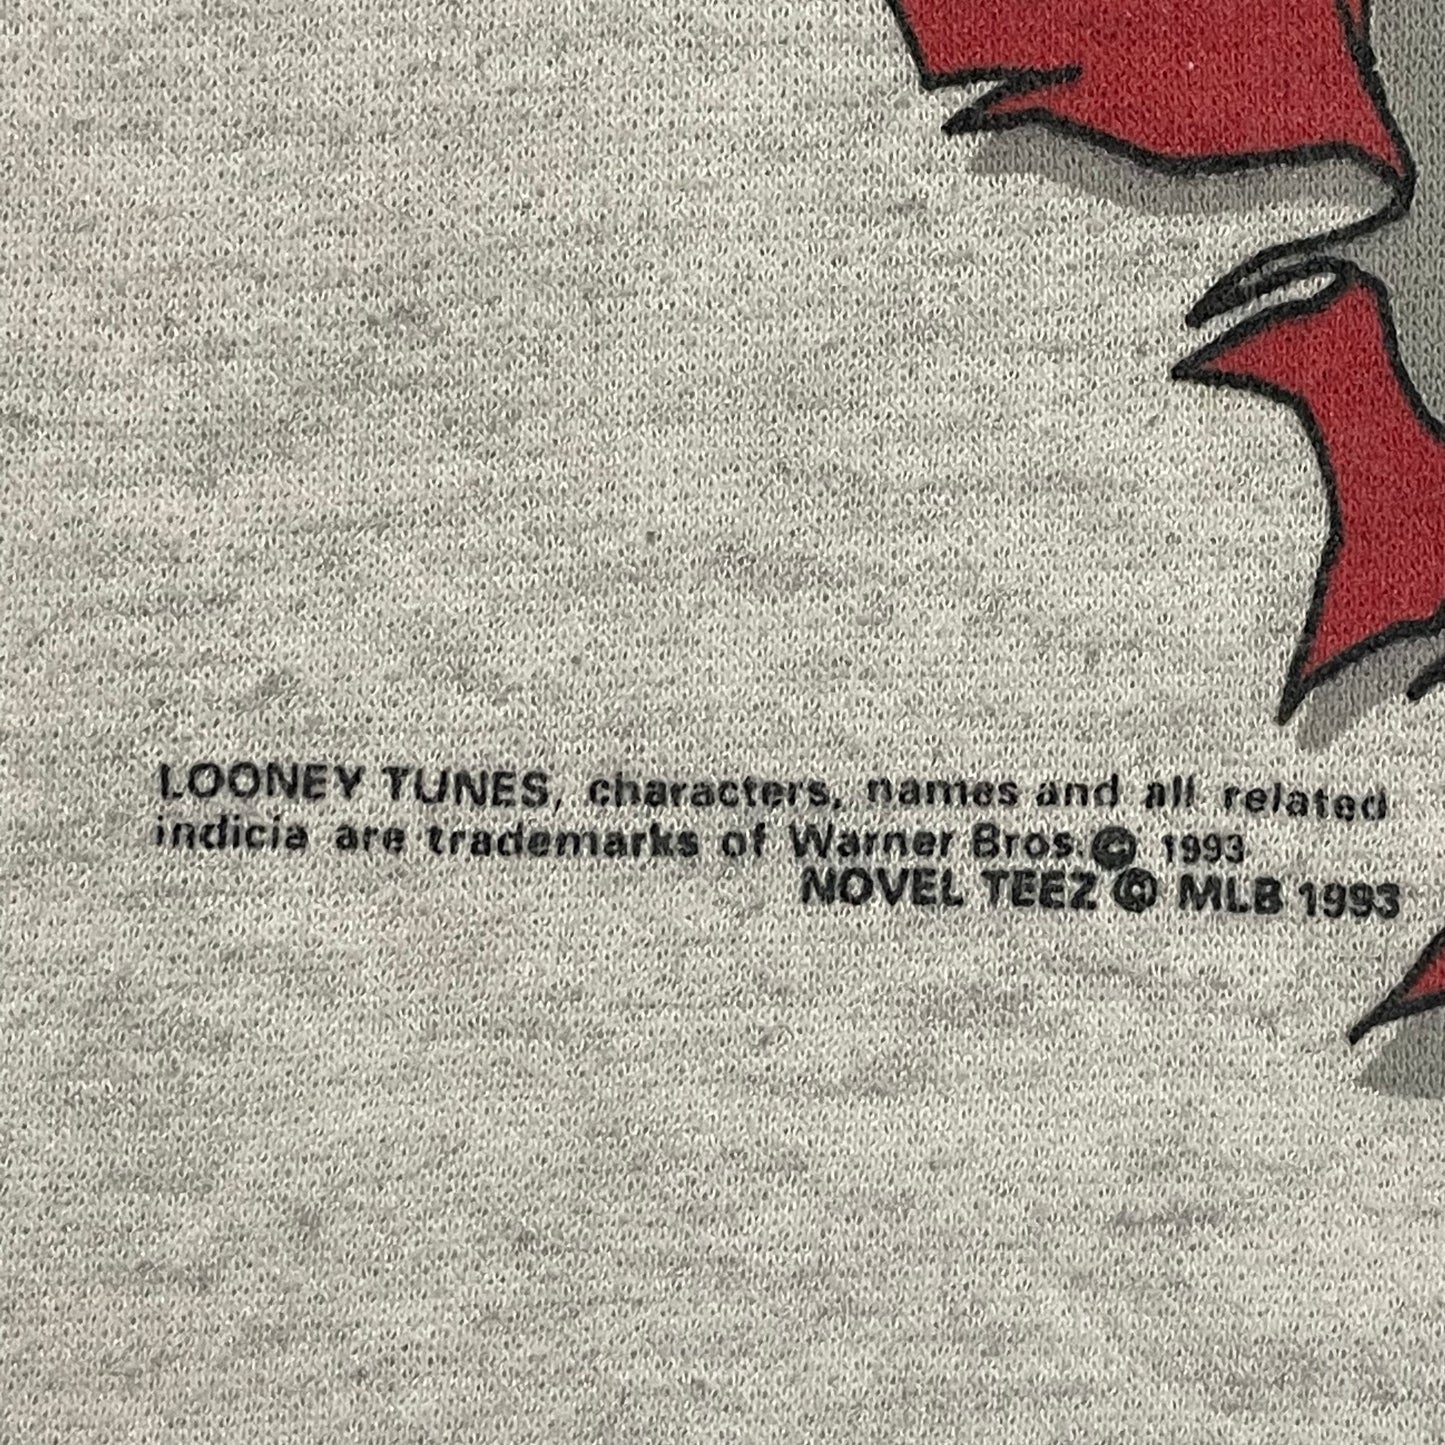 Vintage 1993 Toronto Blue Jays Bugs Bunny Looney Tunes Crewneck